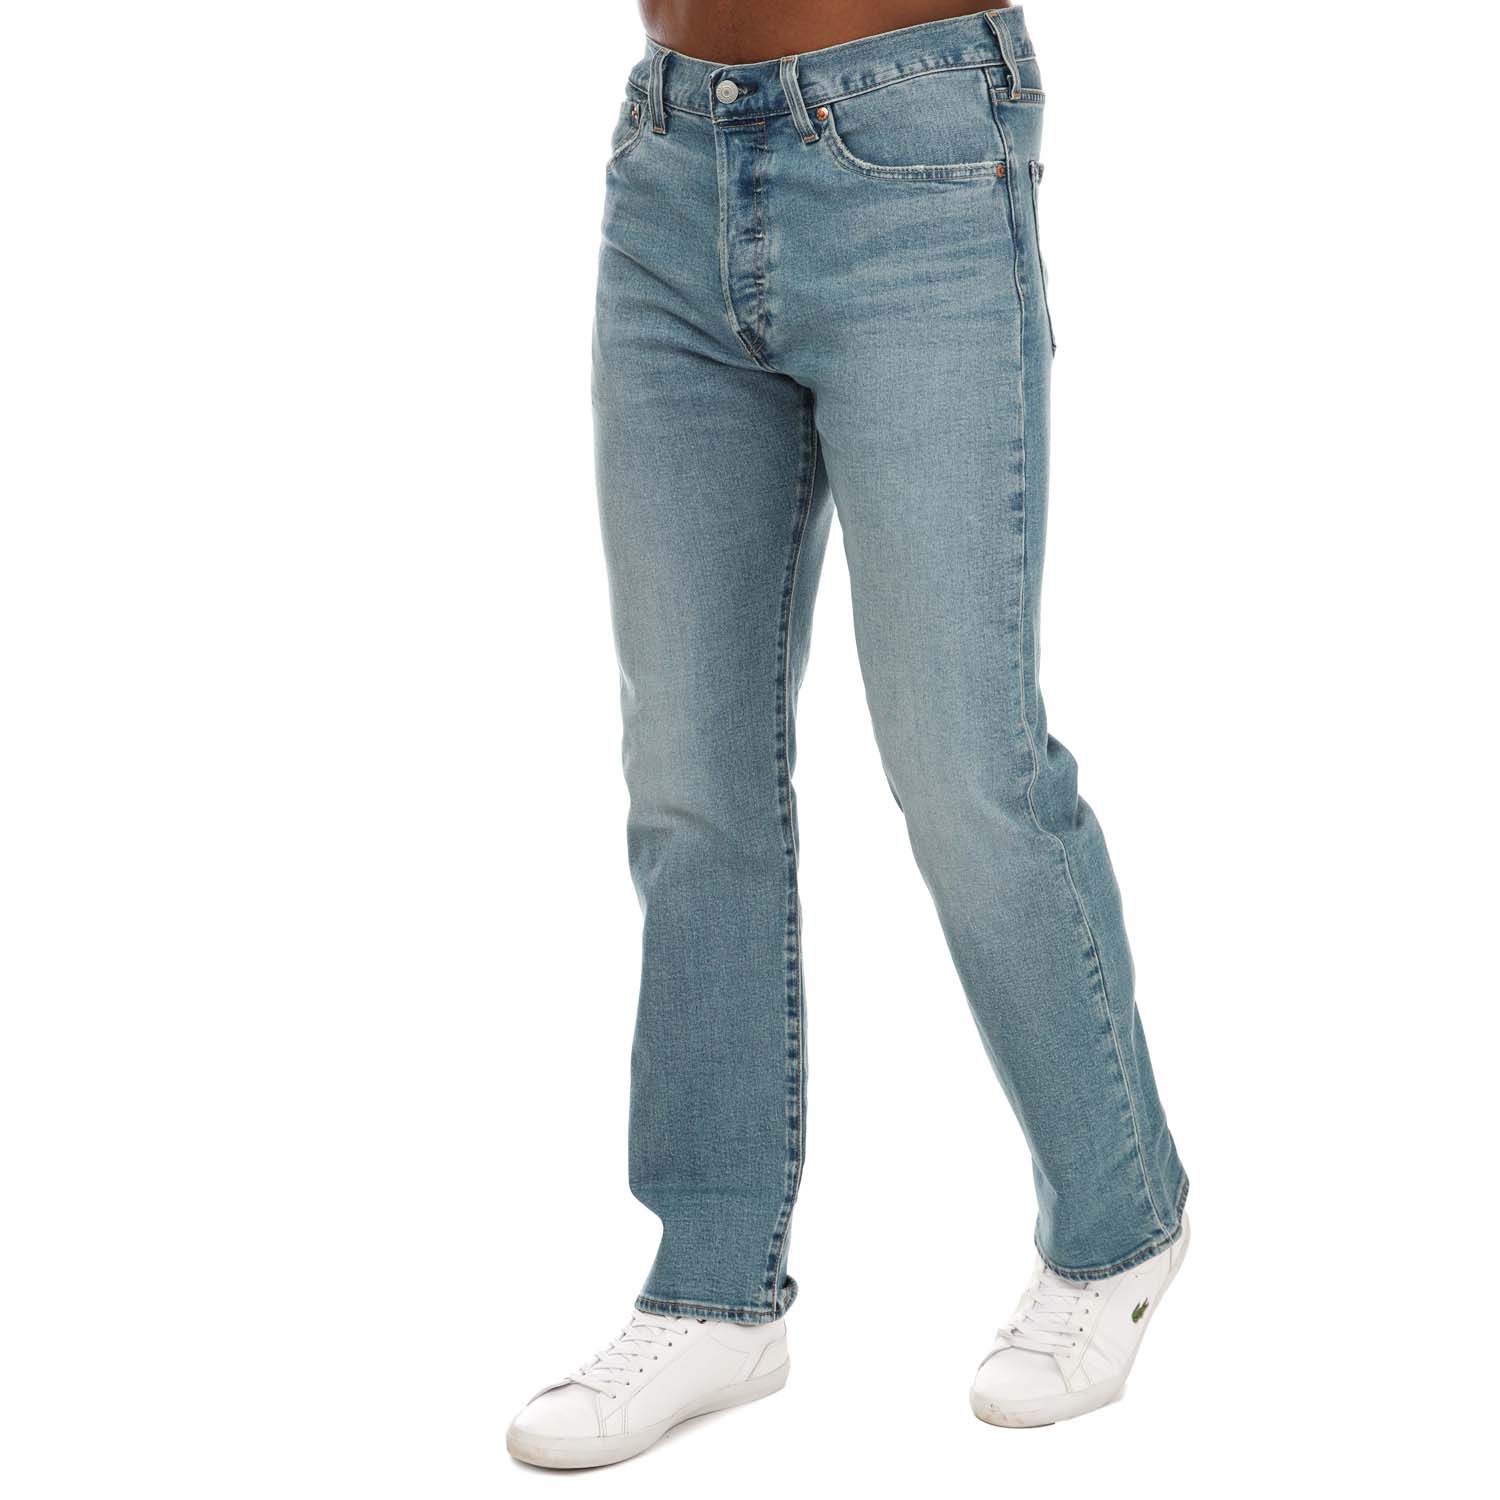 Mens 501 Original Ironwood Jeans